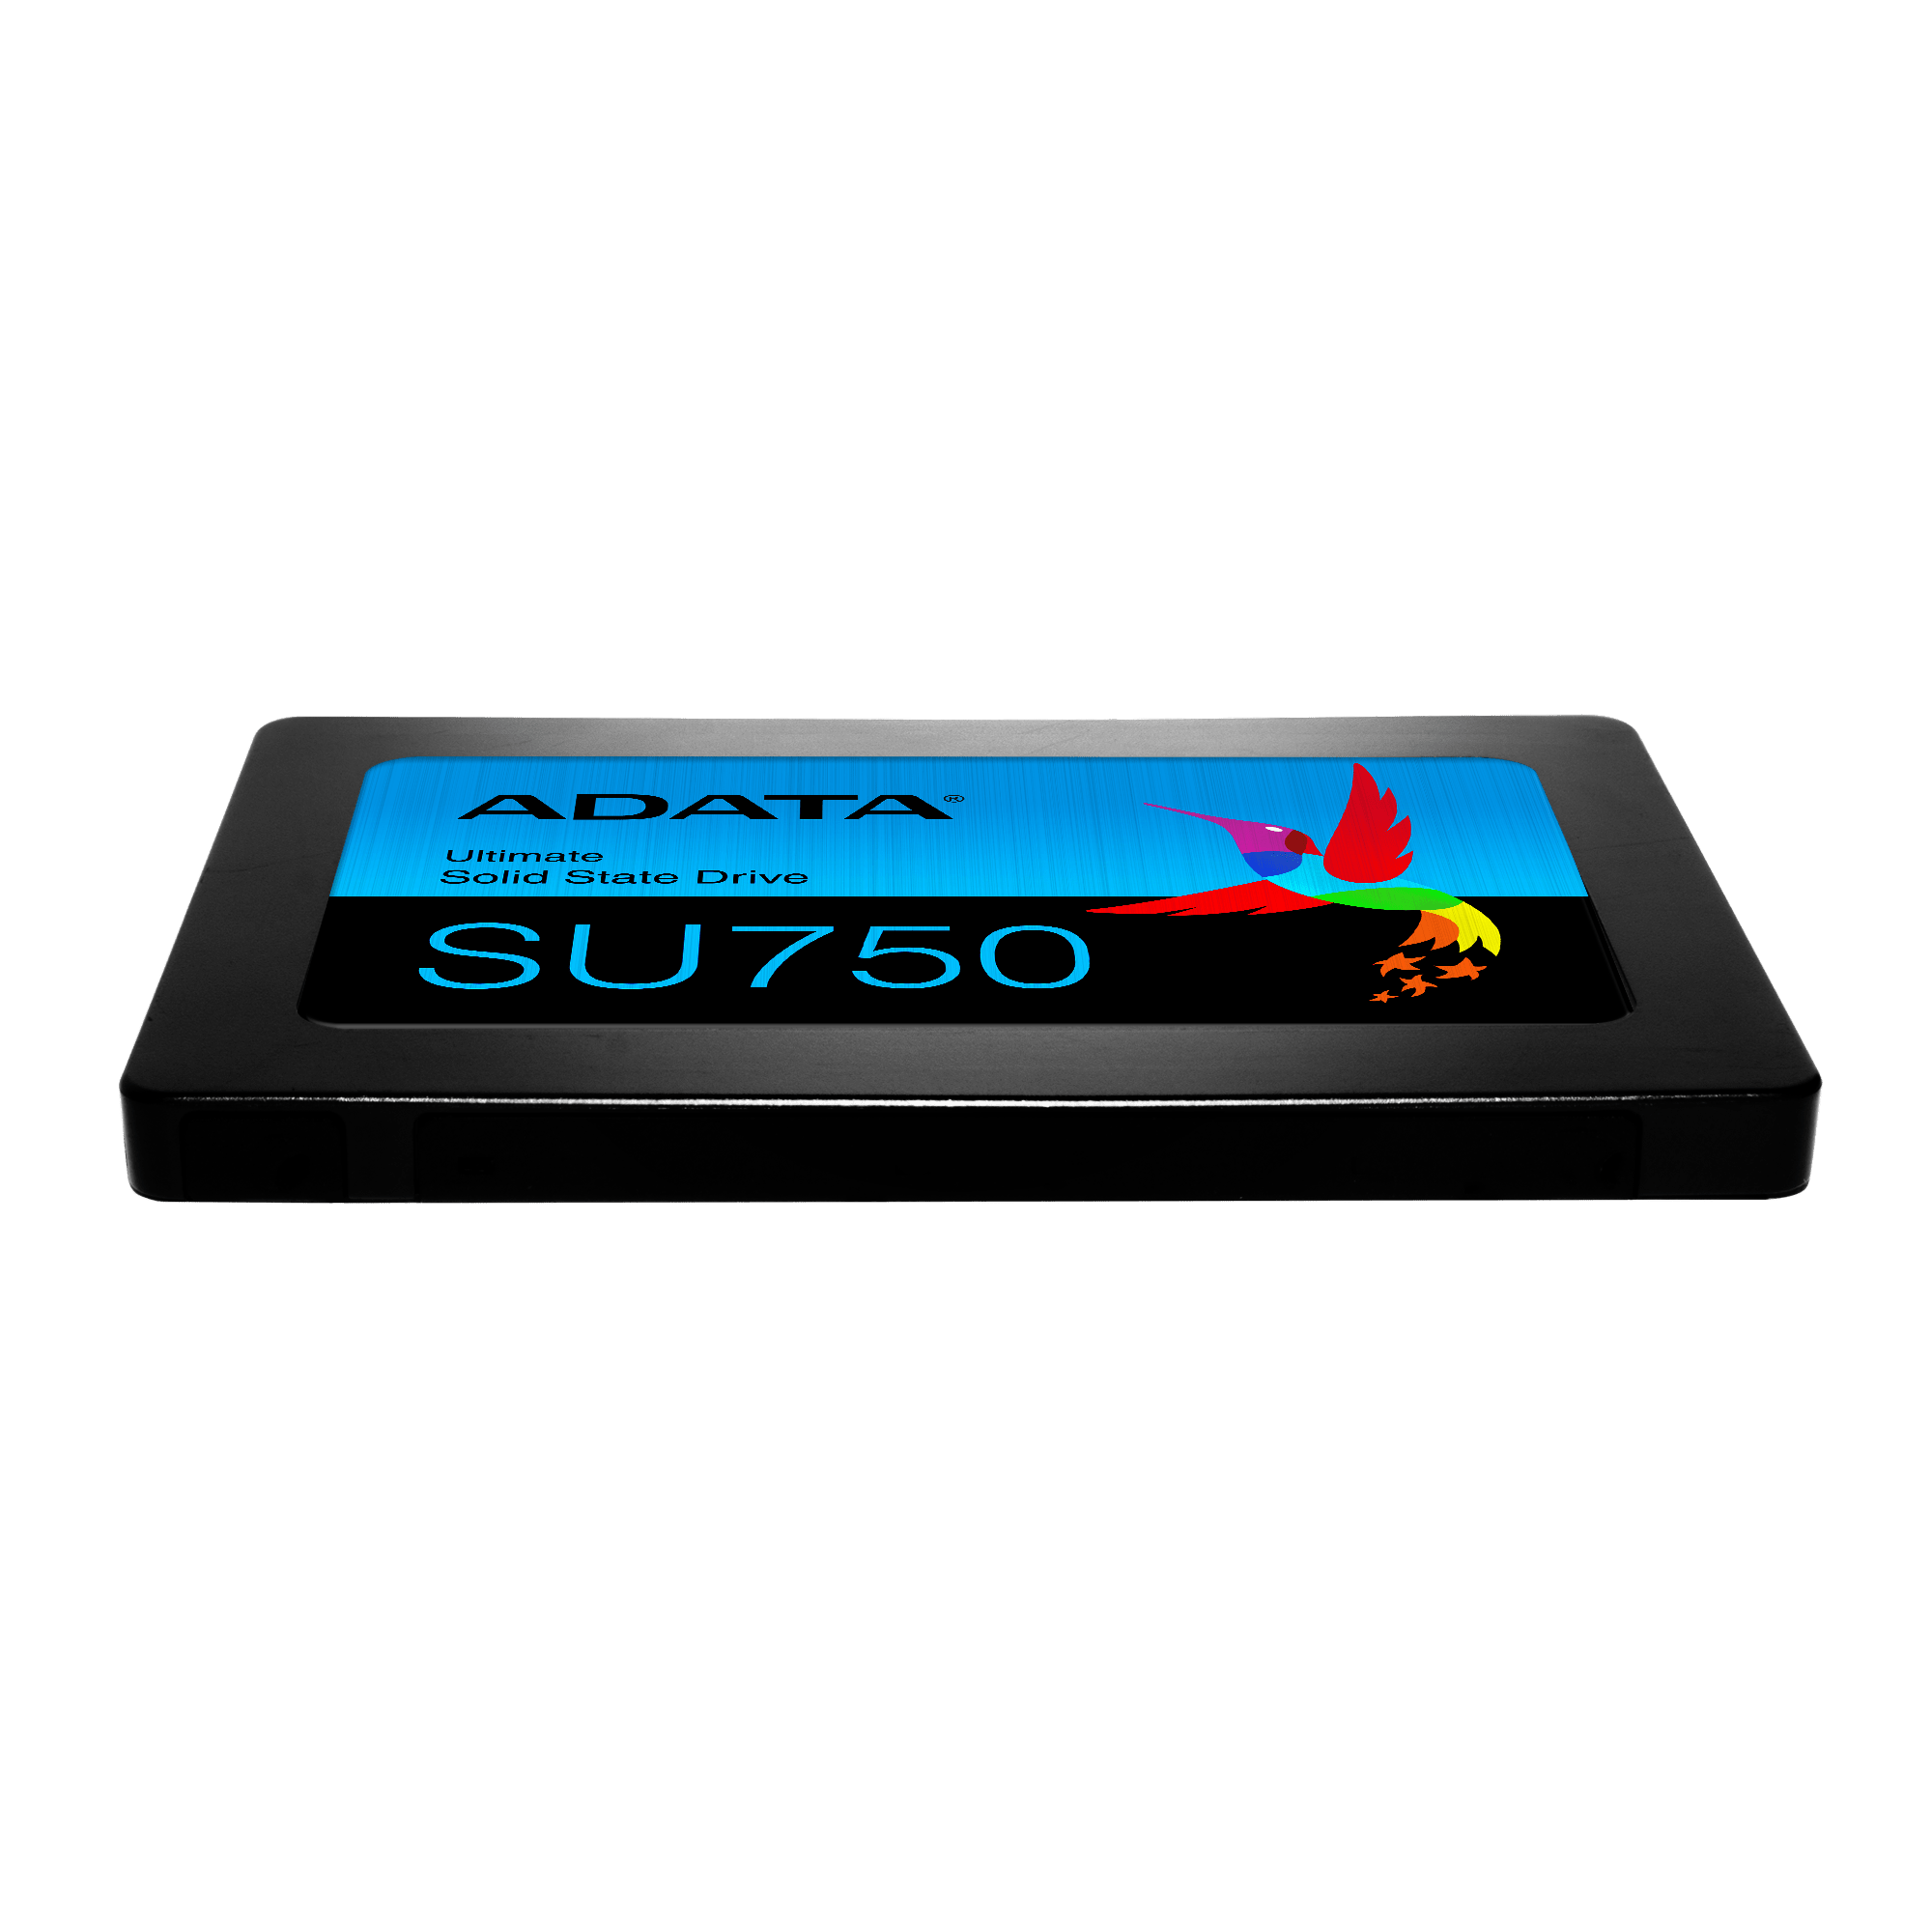 SU750 SSD